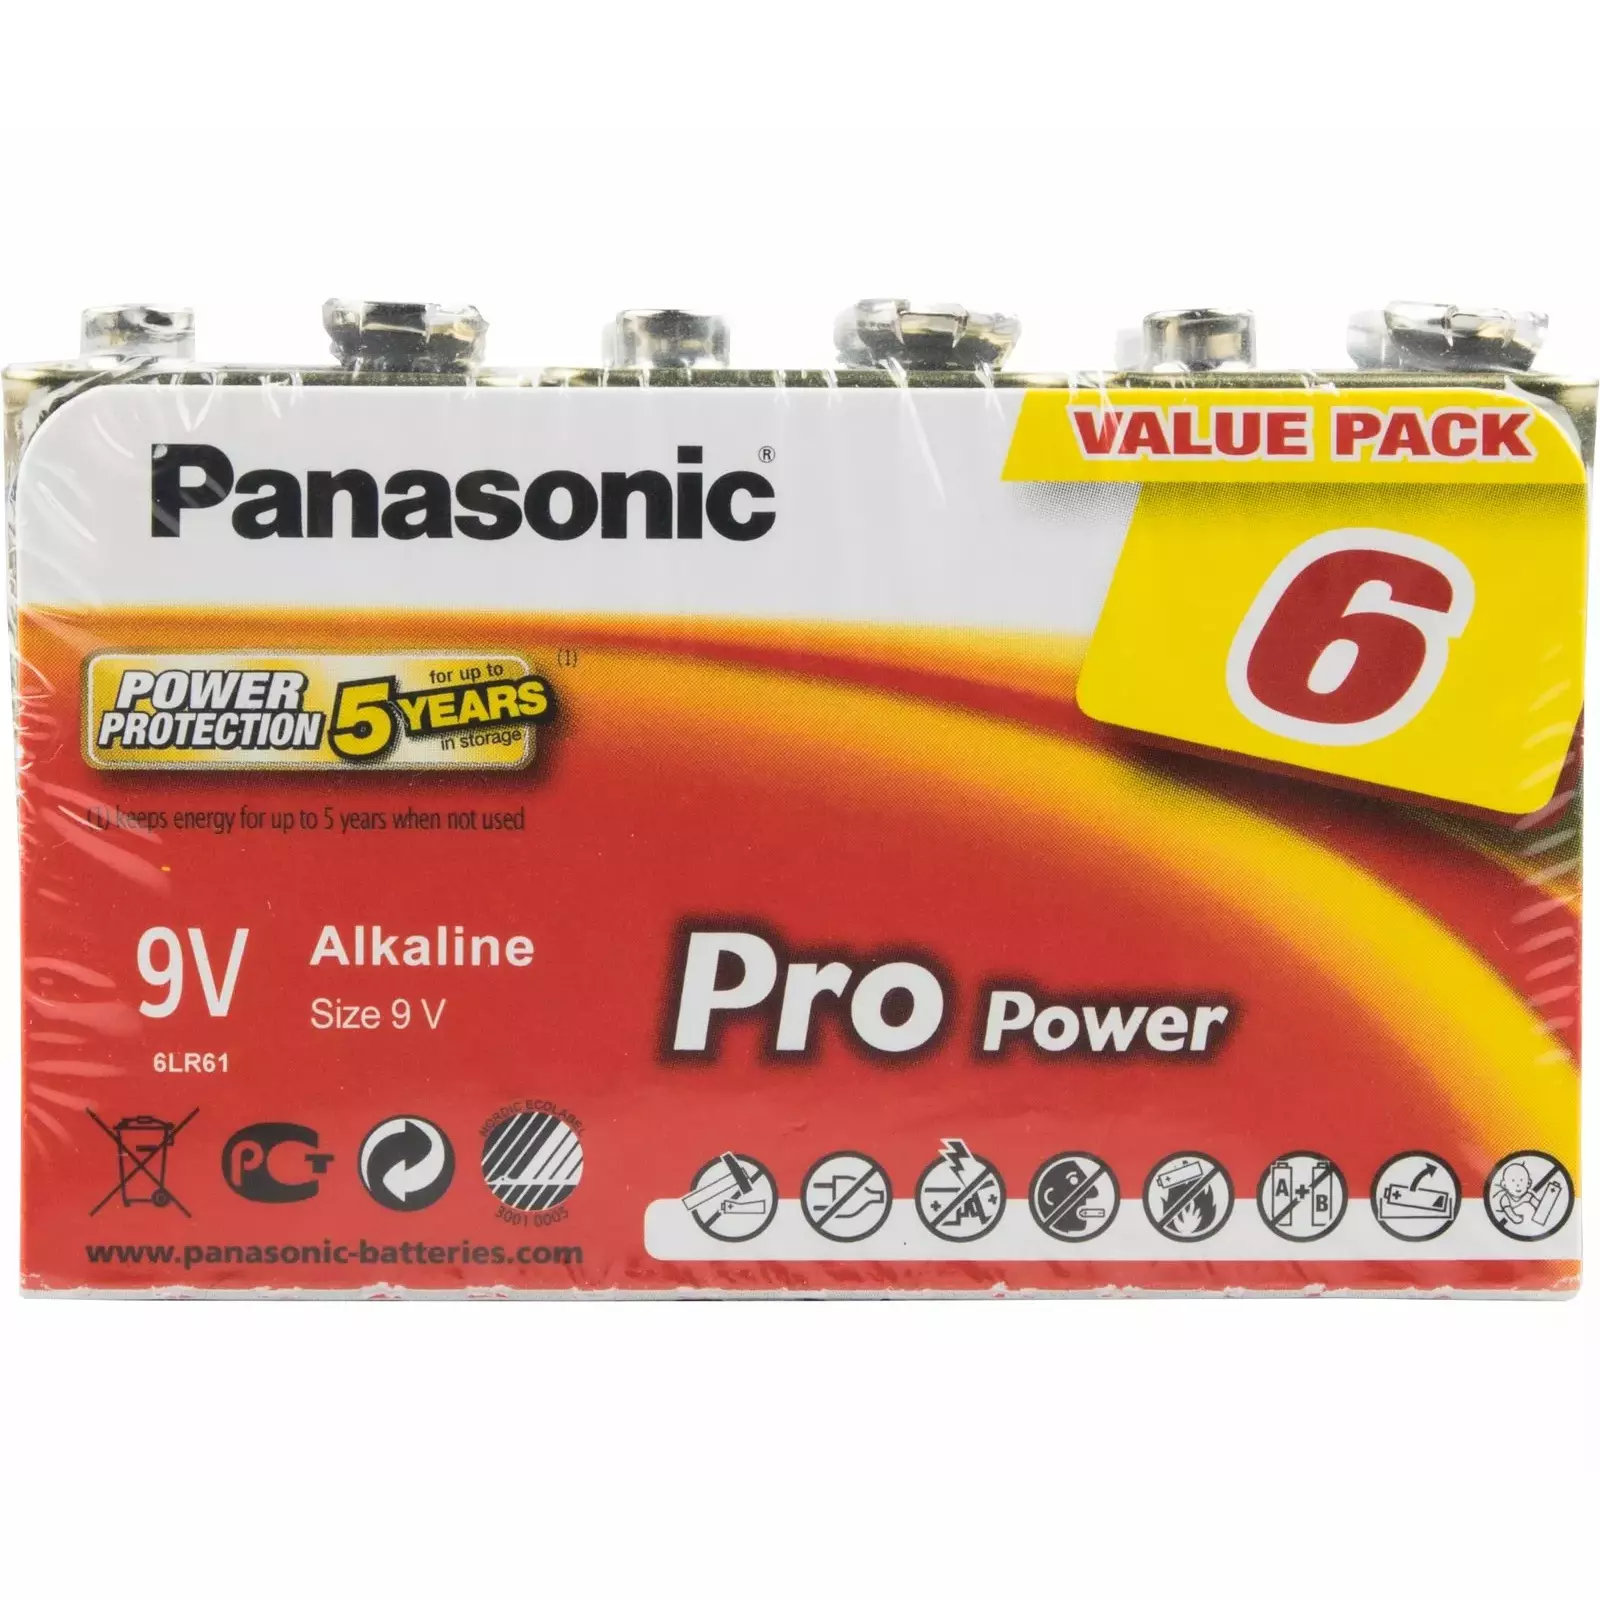 Повер 6. 6lr61 батарейка. PROPOWER батарейки. Panasonic Pro Power. Lr61.